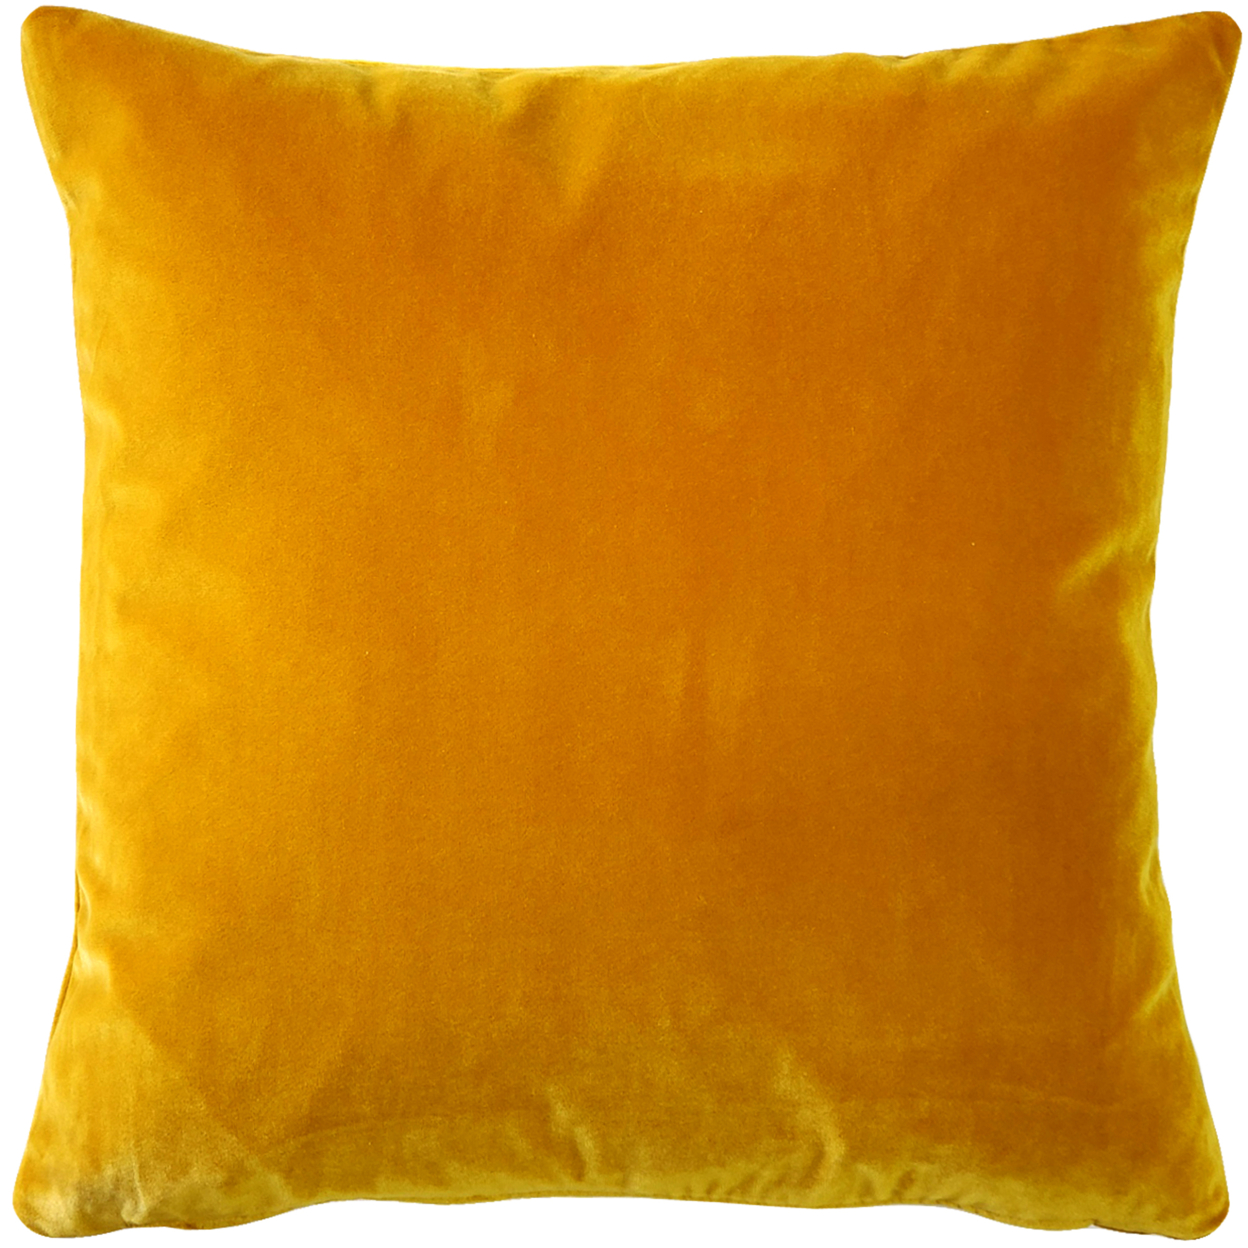 Castello Velvet Throw Pillows, Complete Pillow with Polyfill Pillow Insert (18 Colors, 3 Sizes) - deep yellow, 20x20